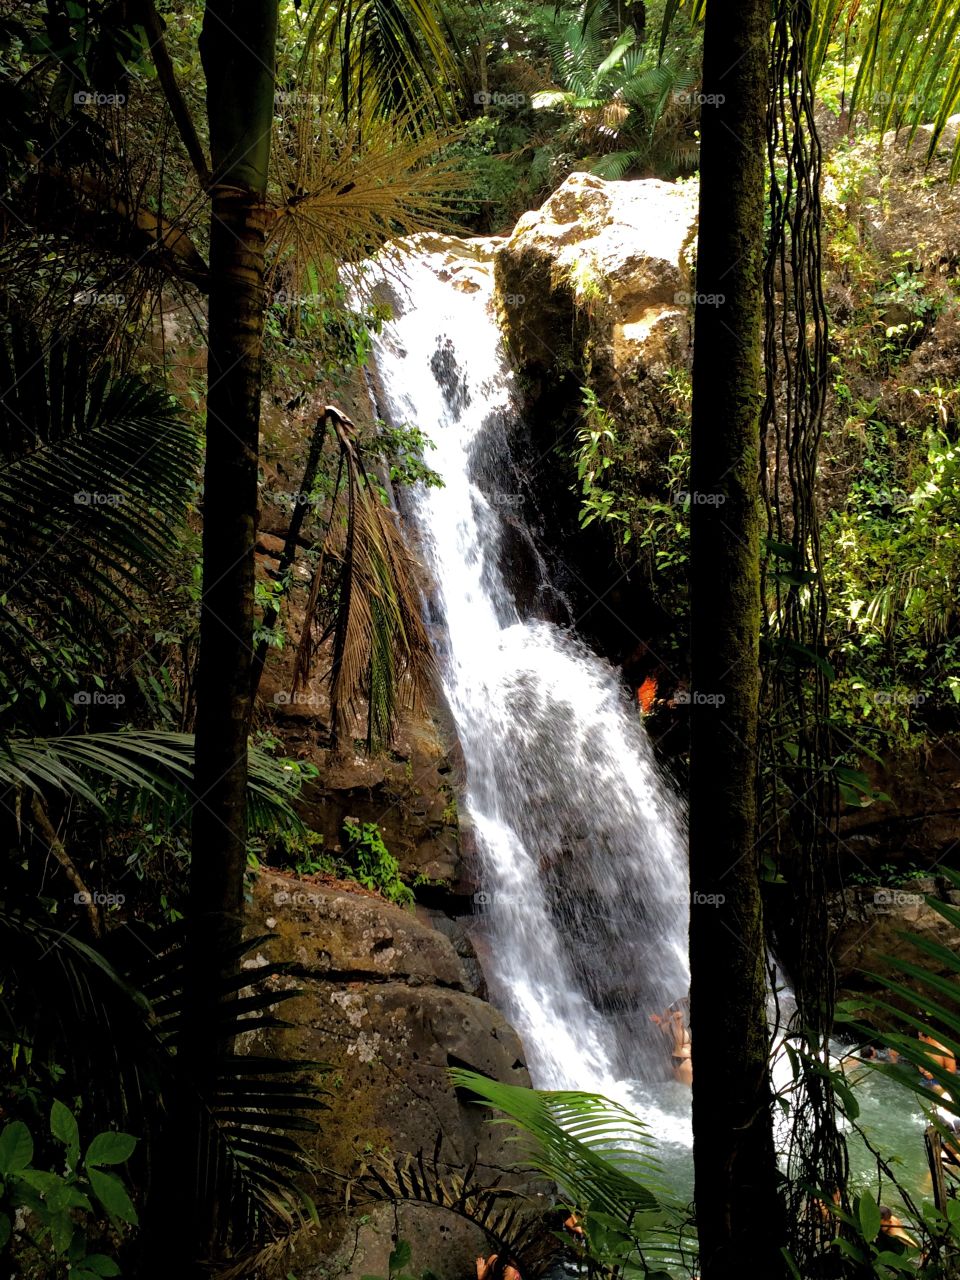 La Mina waterfall. La Mina waterfalls in the heart of El Yunque national rainforest park in Puerto Rico.